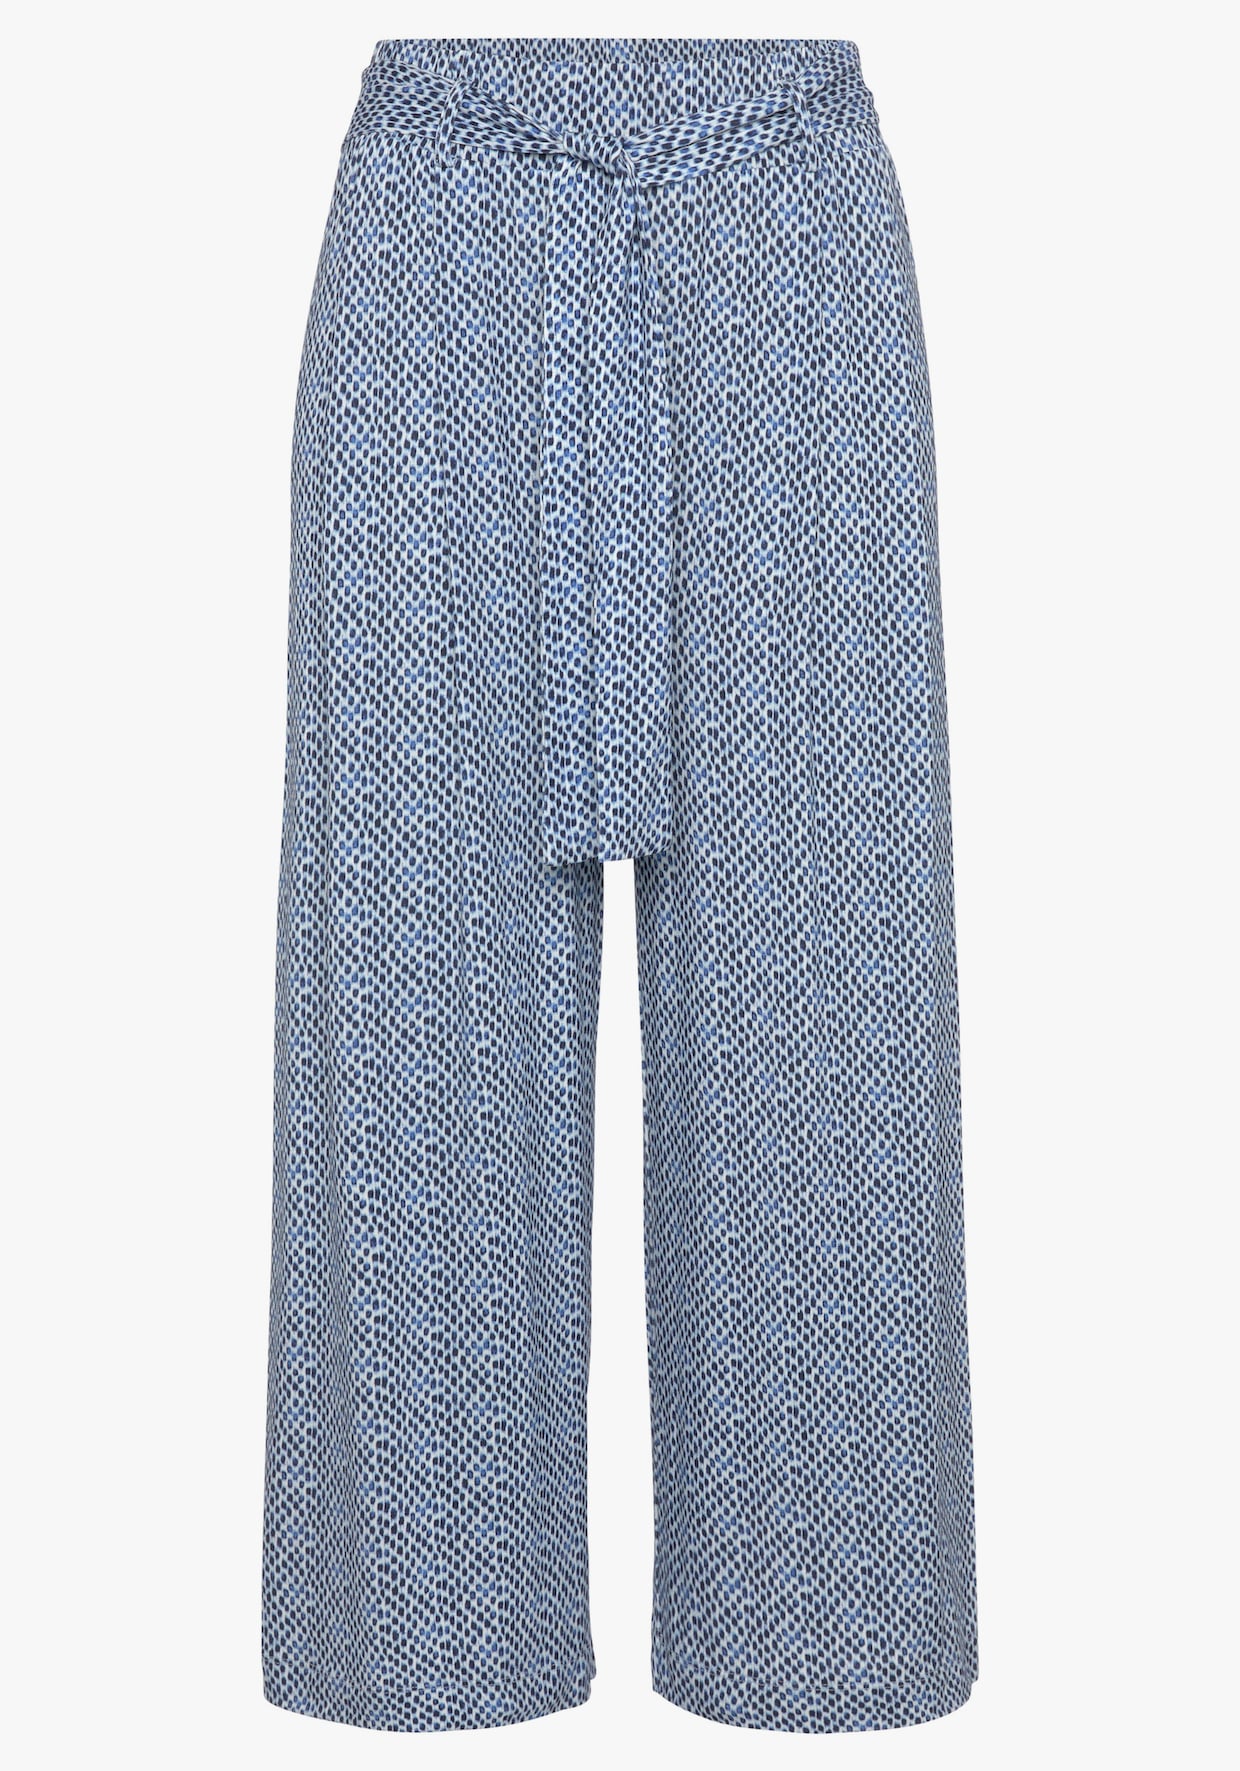 LASCANA Jupe culotte - bleu imprimé